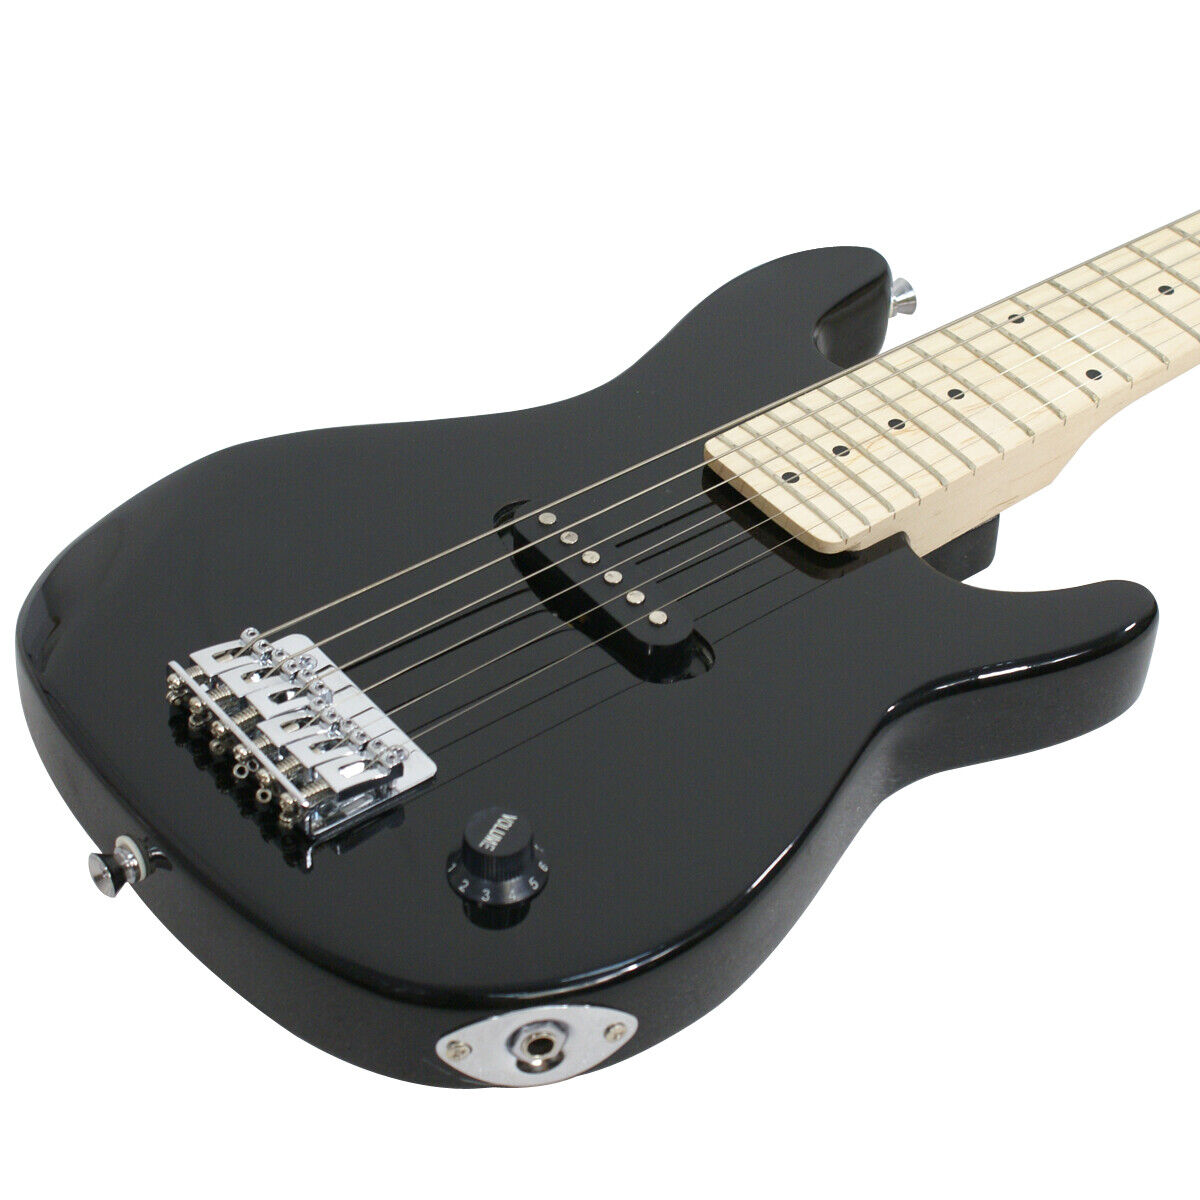 thinkstar Kids 30" Beginner Guitar With Amp Case Electric Guitar Accessories Pack Black